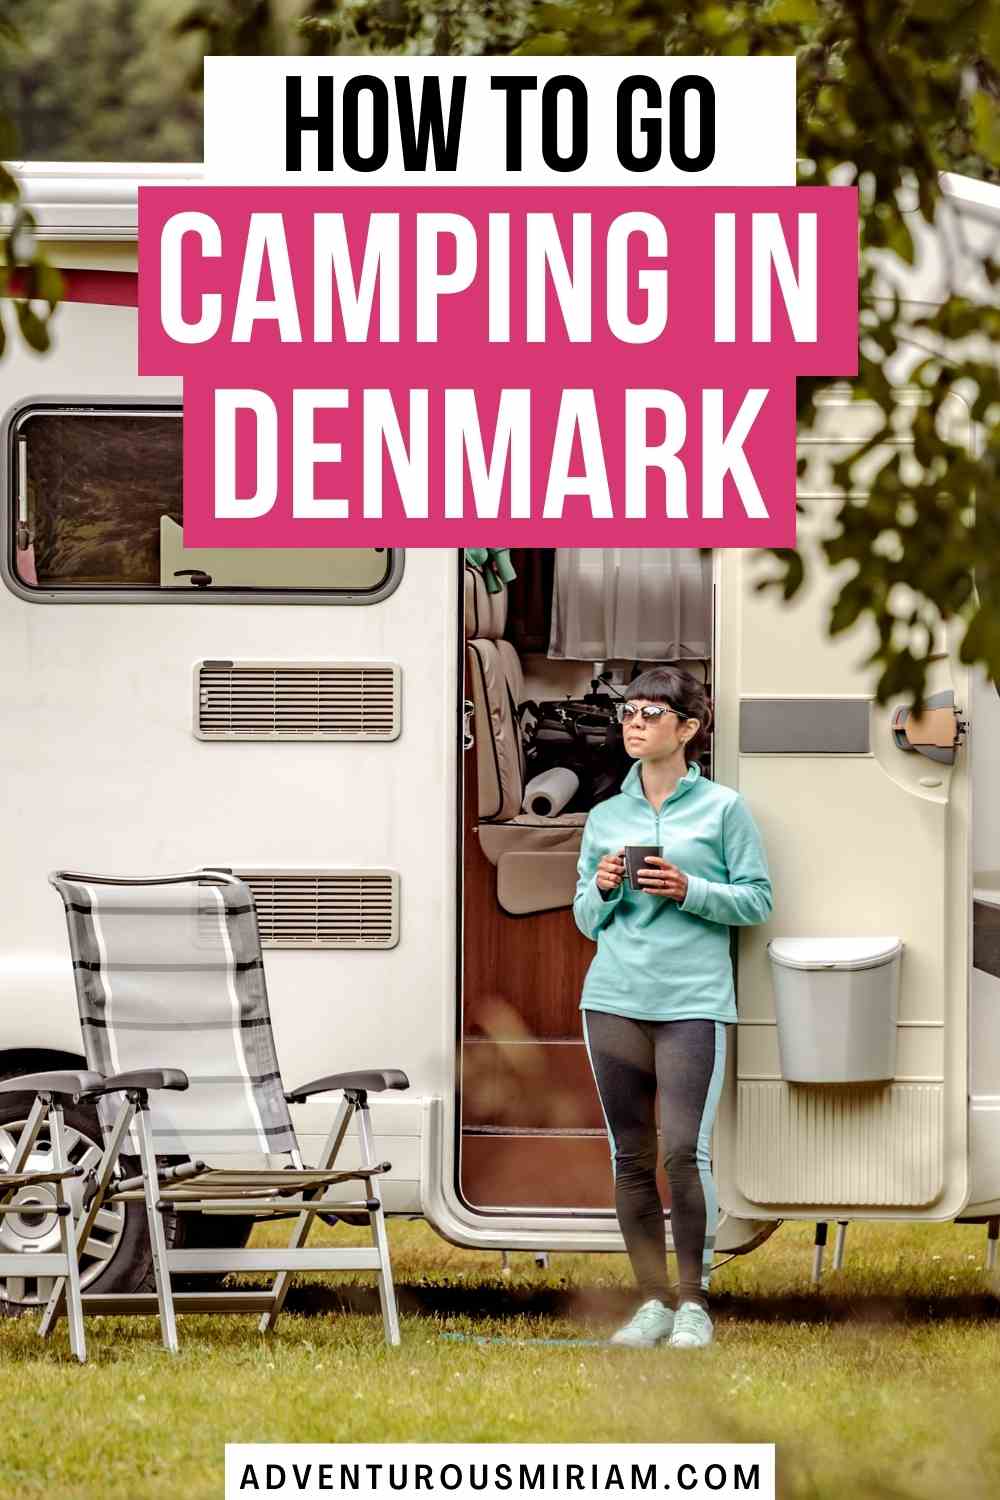 Camping denmark. Wild camping denmark. Camp denmark. How to go camping in Denmark. Scandinavia holiday. Summer denmark. Holiday in denmark.